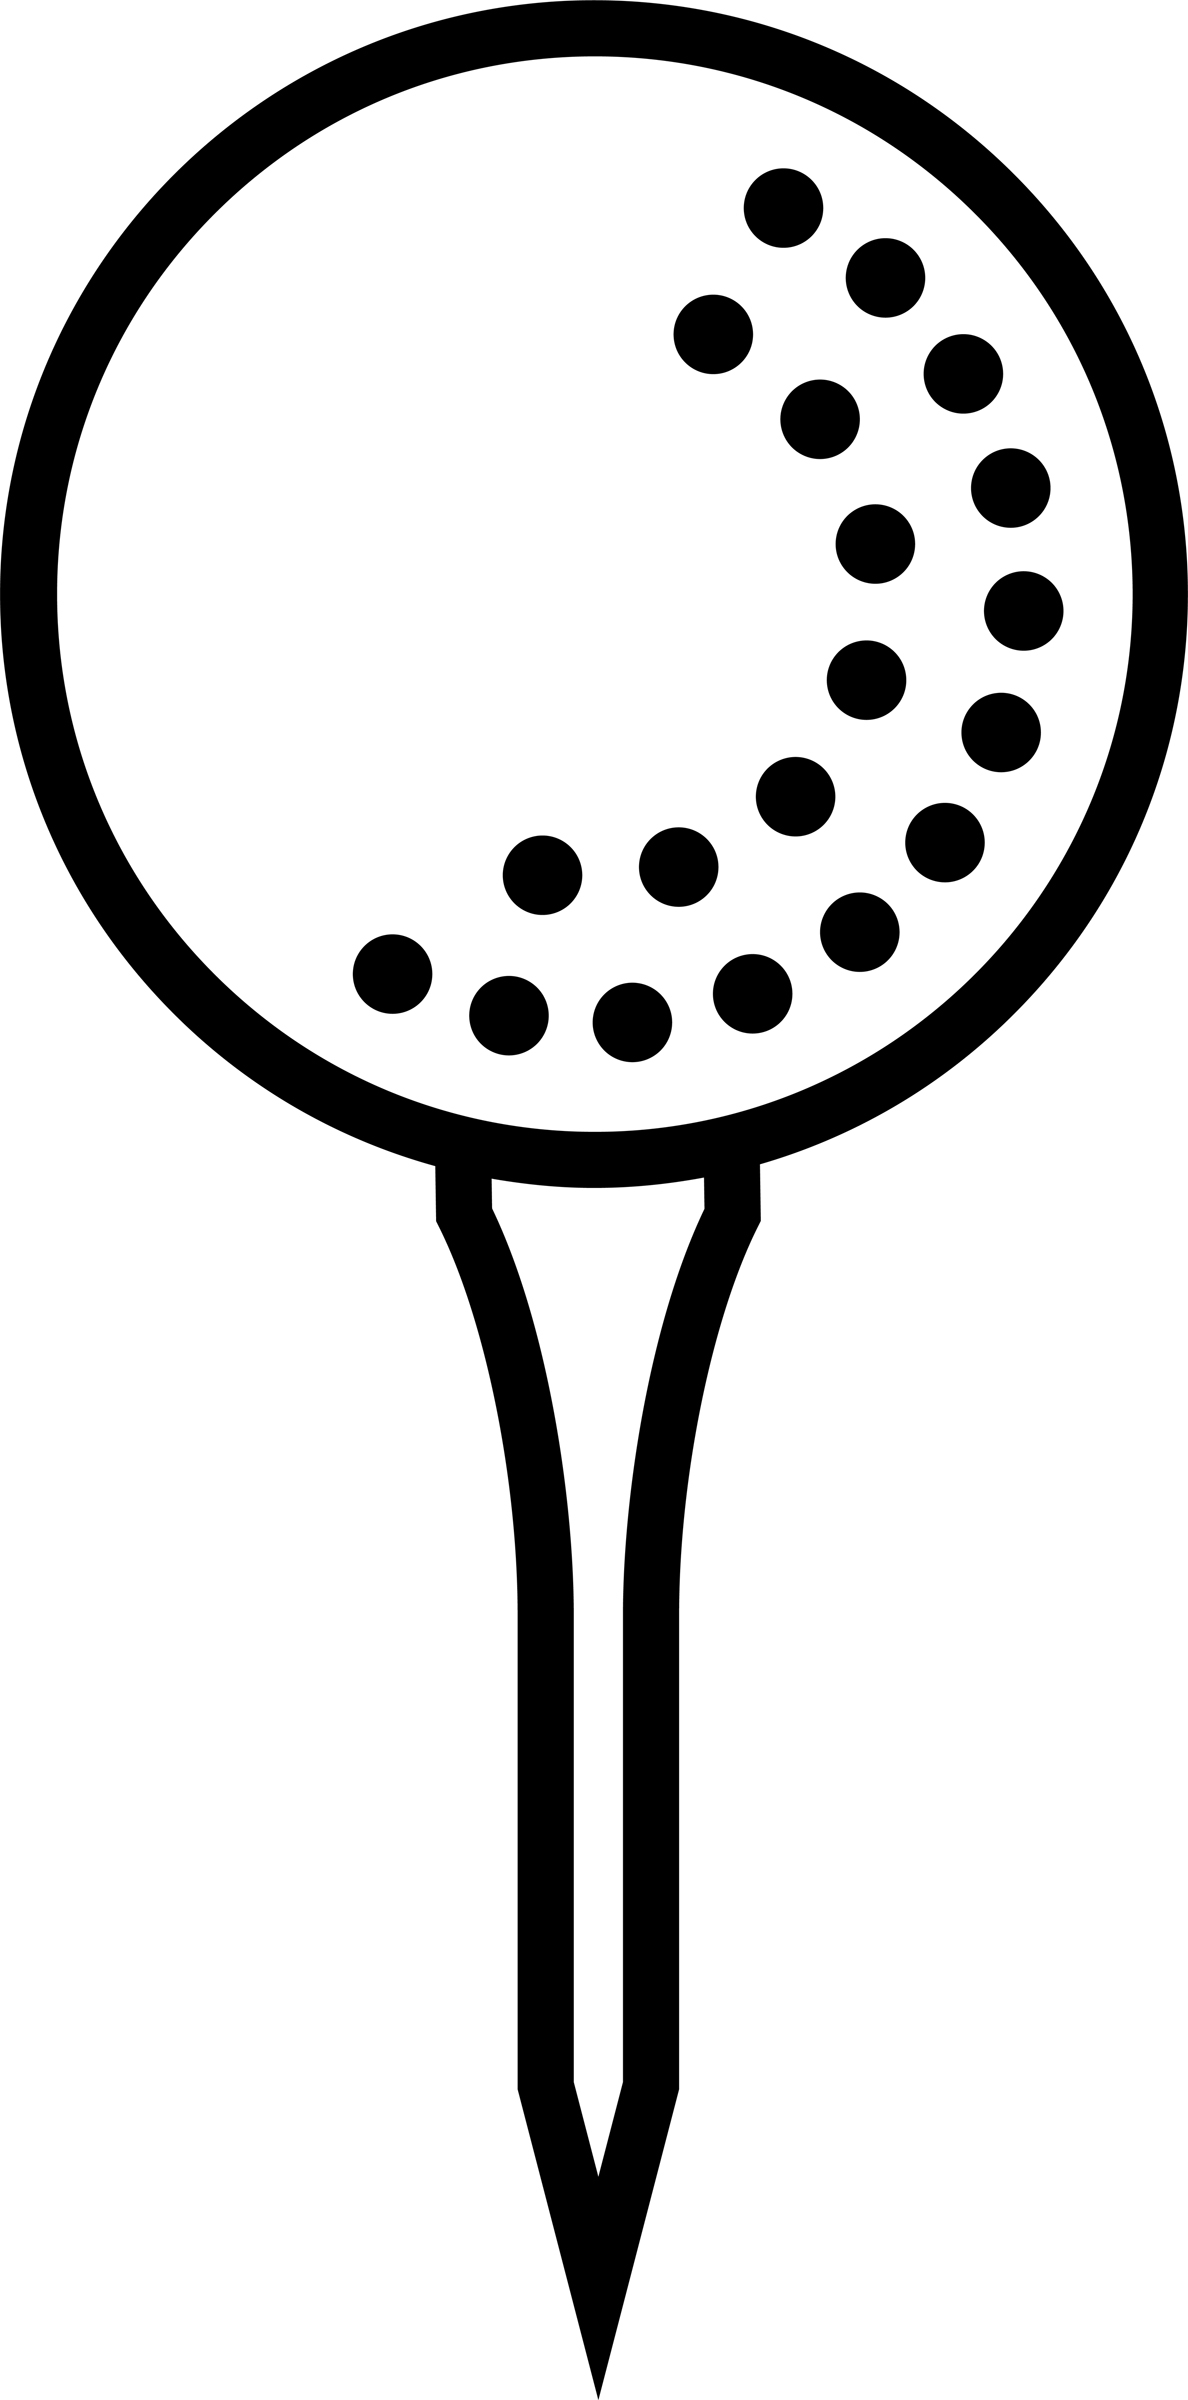 free vector clip art golf - photo #24